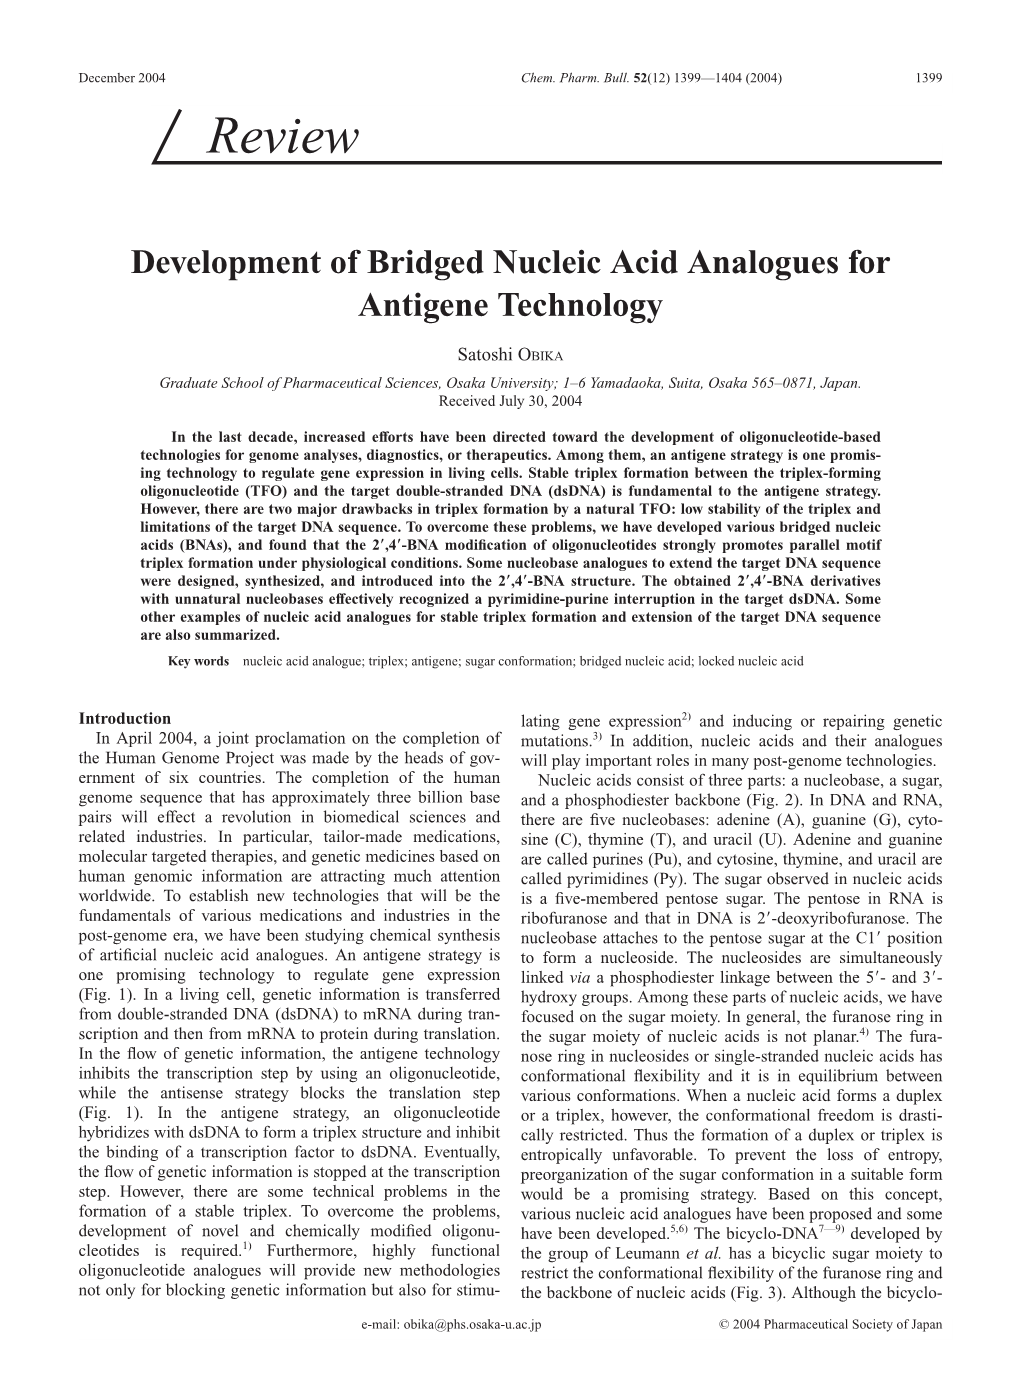 Development of Bridged Nucleic Acid Analogues for Antigene Technology